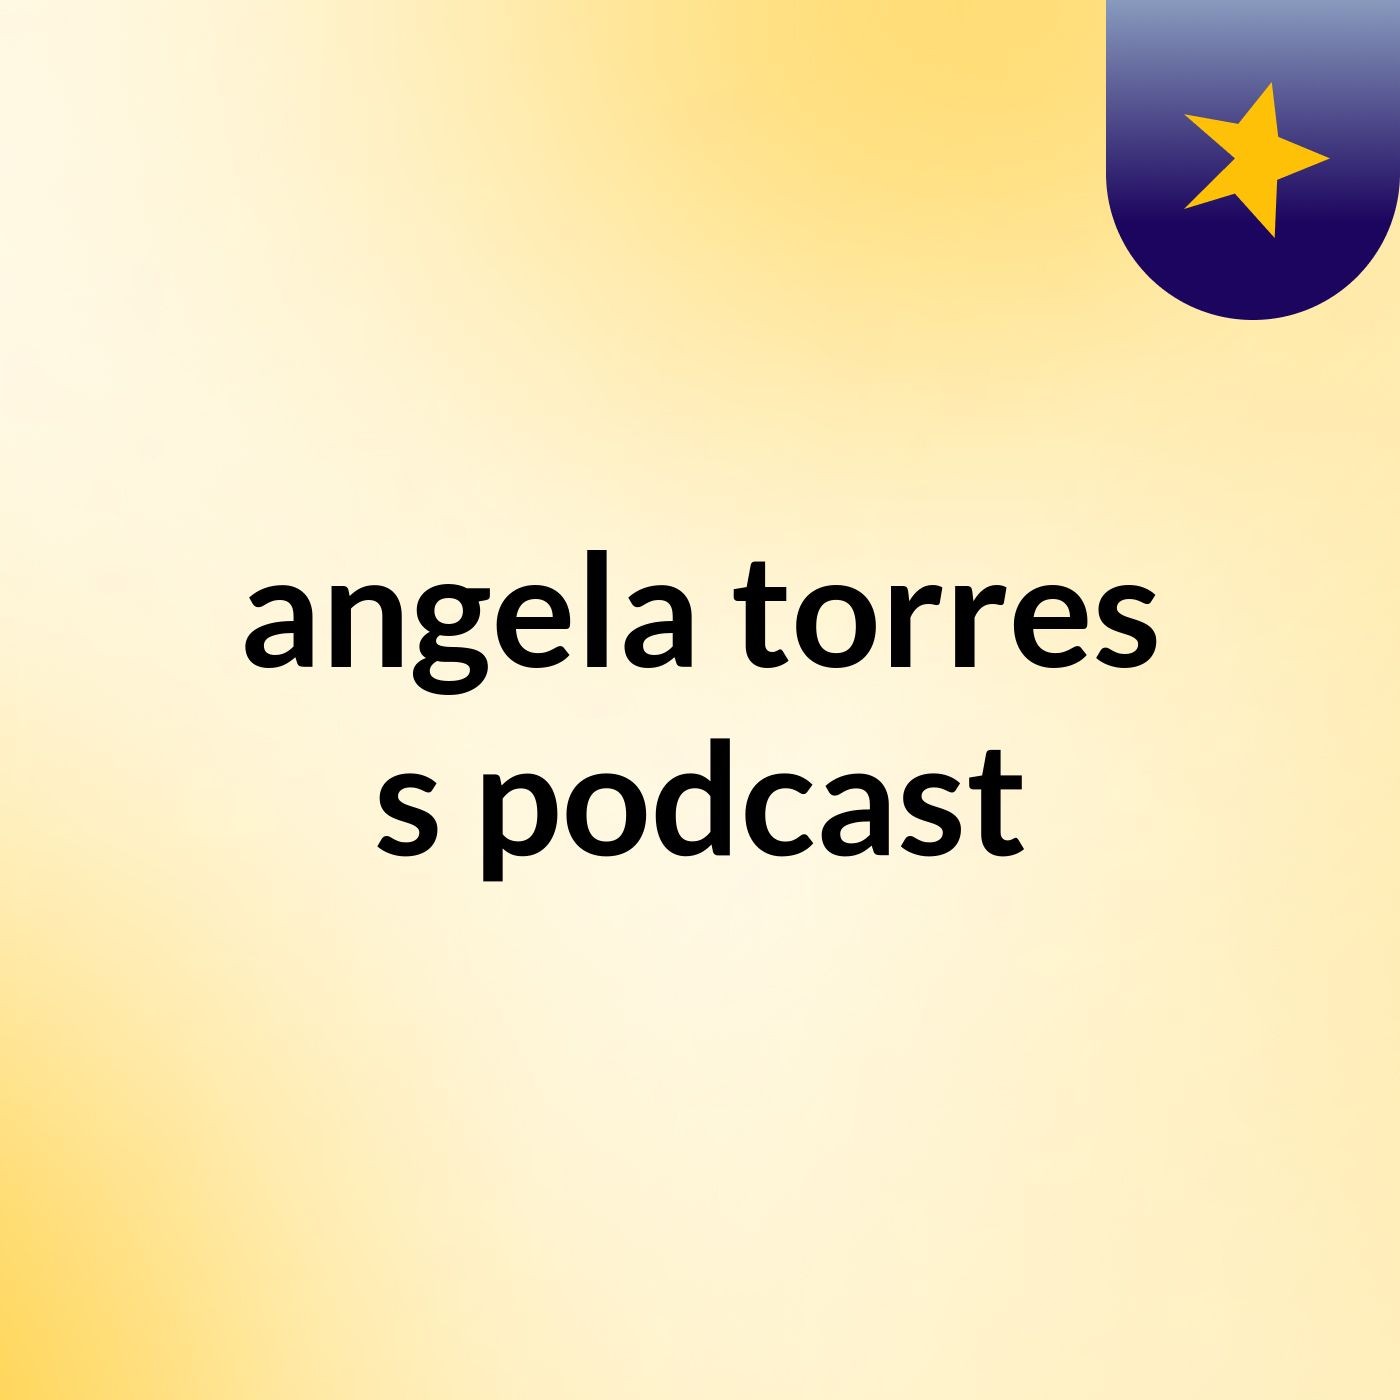 angela torres's podcast